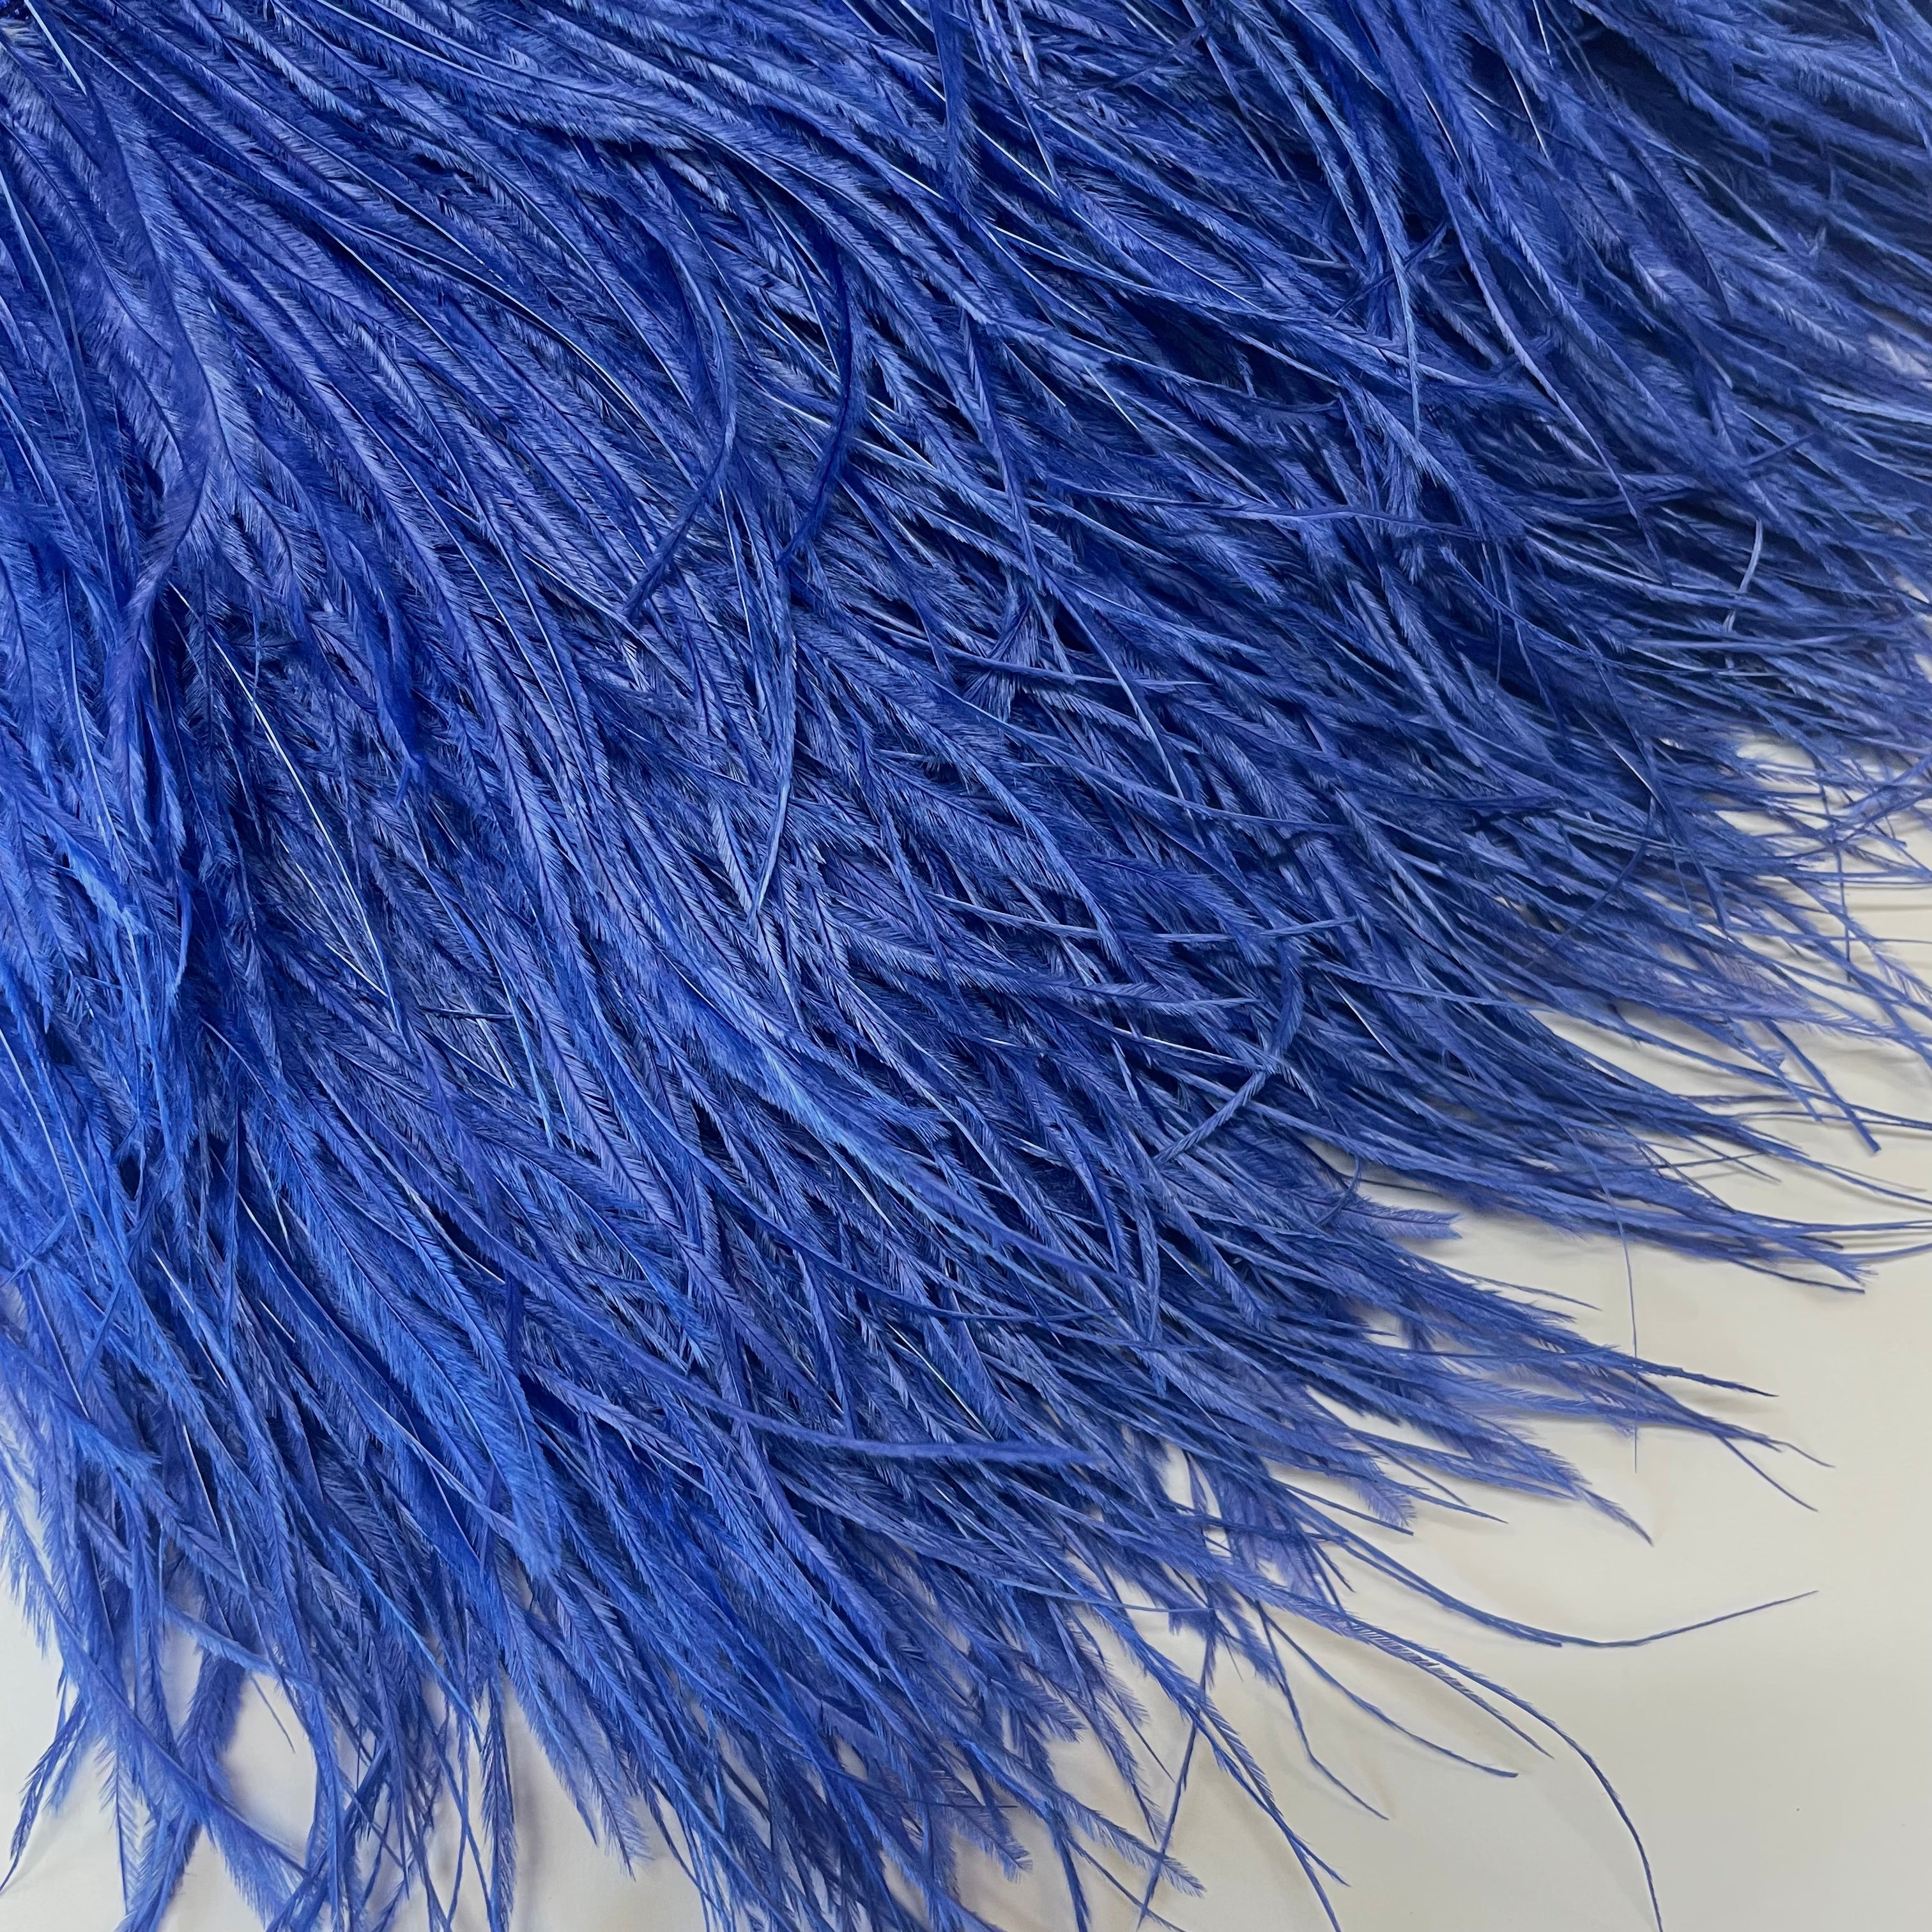 Ostrich Feathers Strung per metre - Royal Blue